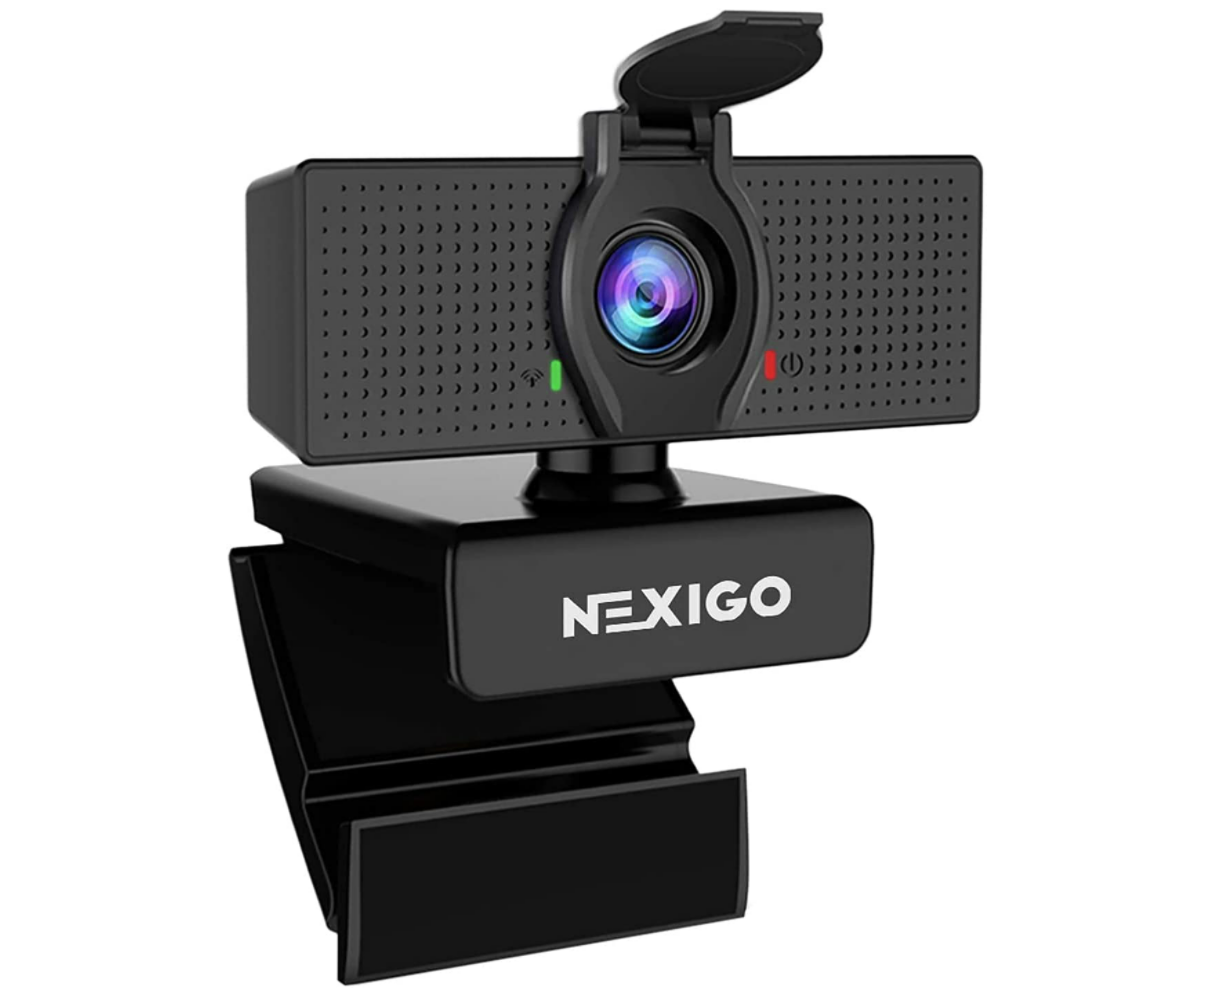 Nexigo N60 - Tweede plaats beste budgetwebcam